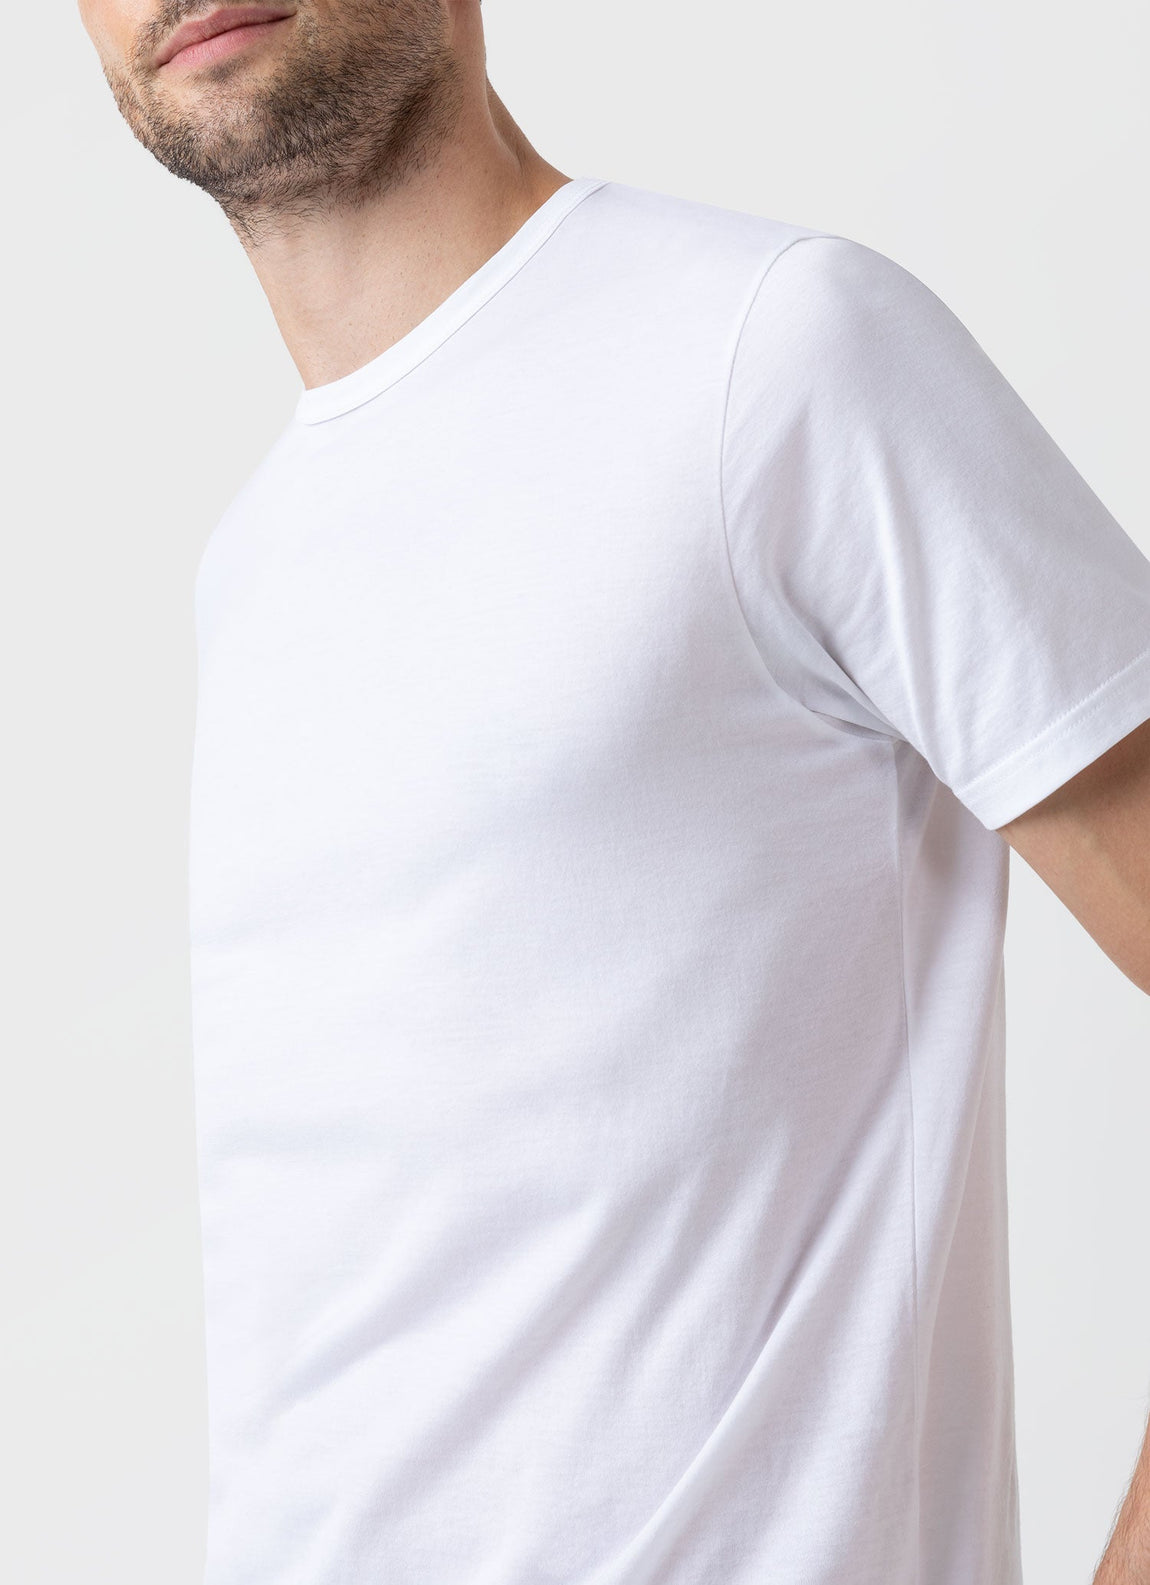 koffer leerboek Hiel Men's Classic Cotton T-shirt in White | Sunspel